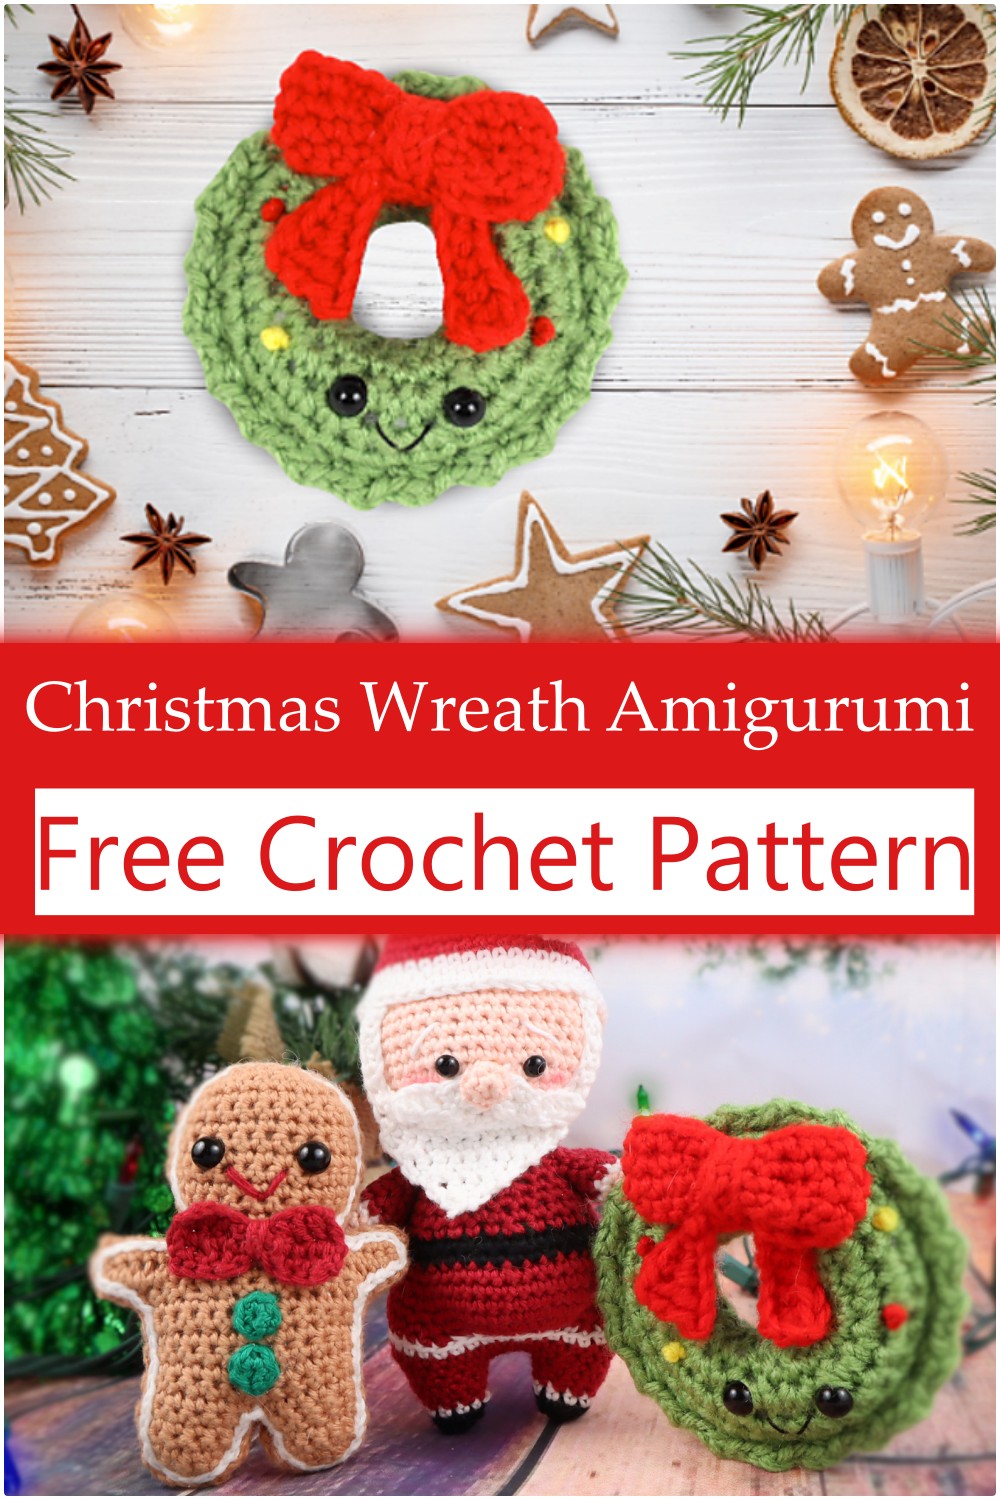  Crochet Christmas Wreath Amigurumi